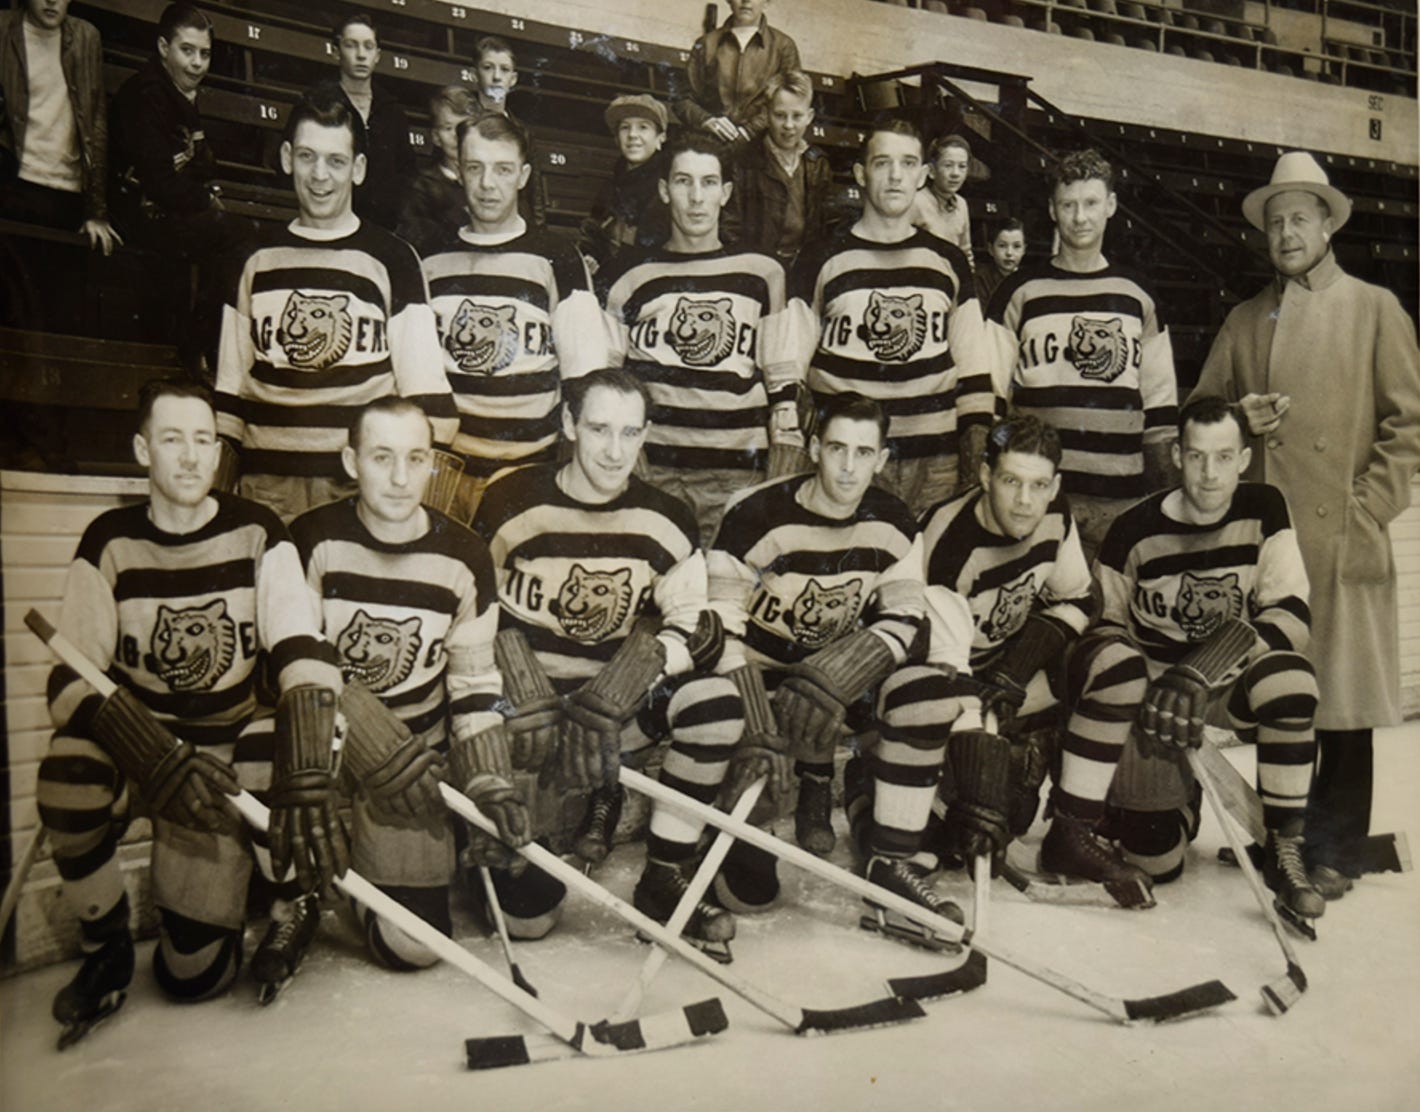 A team photograph of the historic Calgary Tigers hockey team.